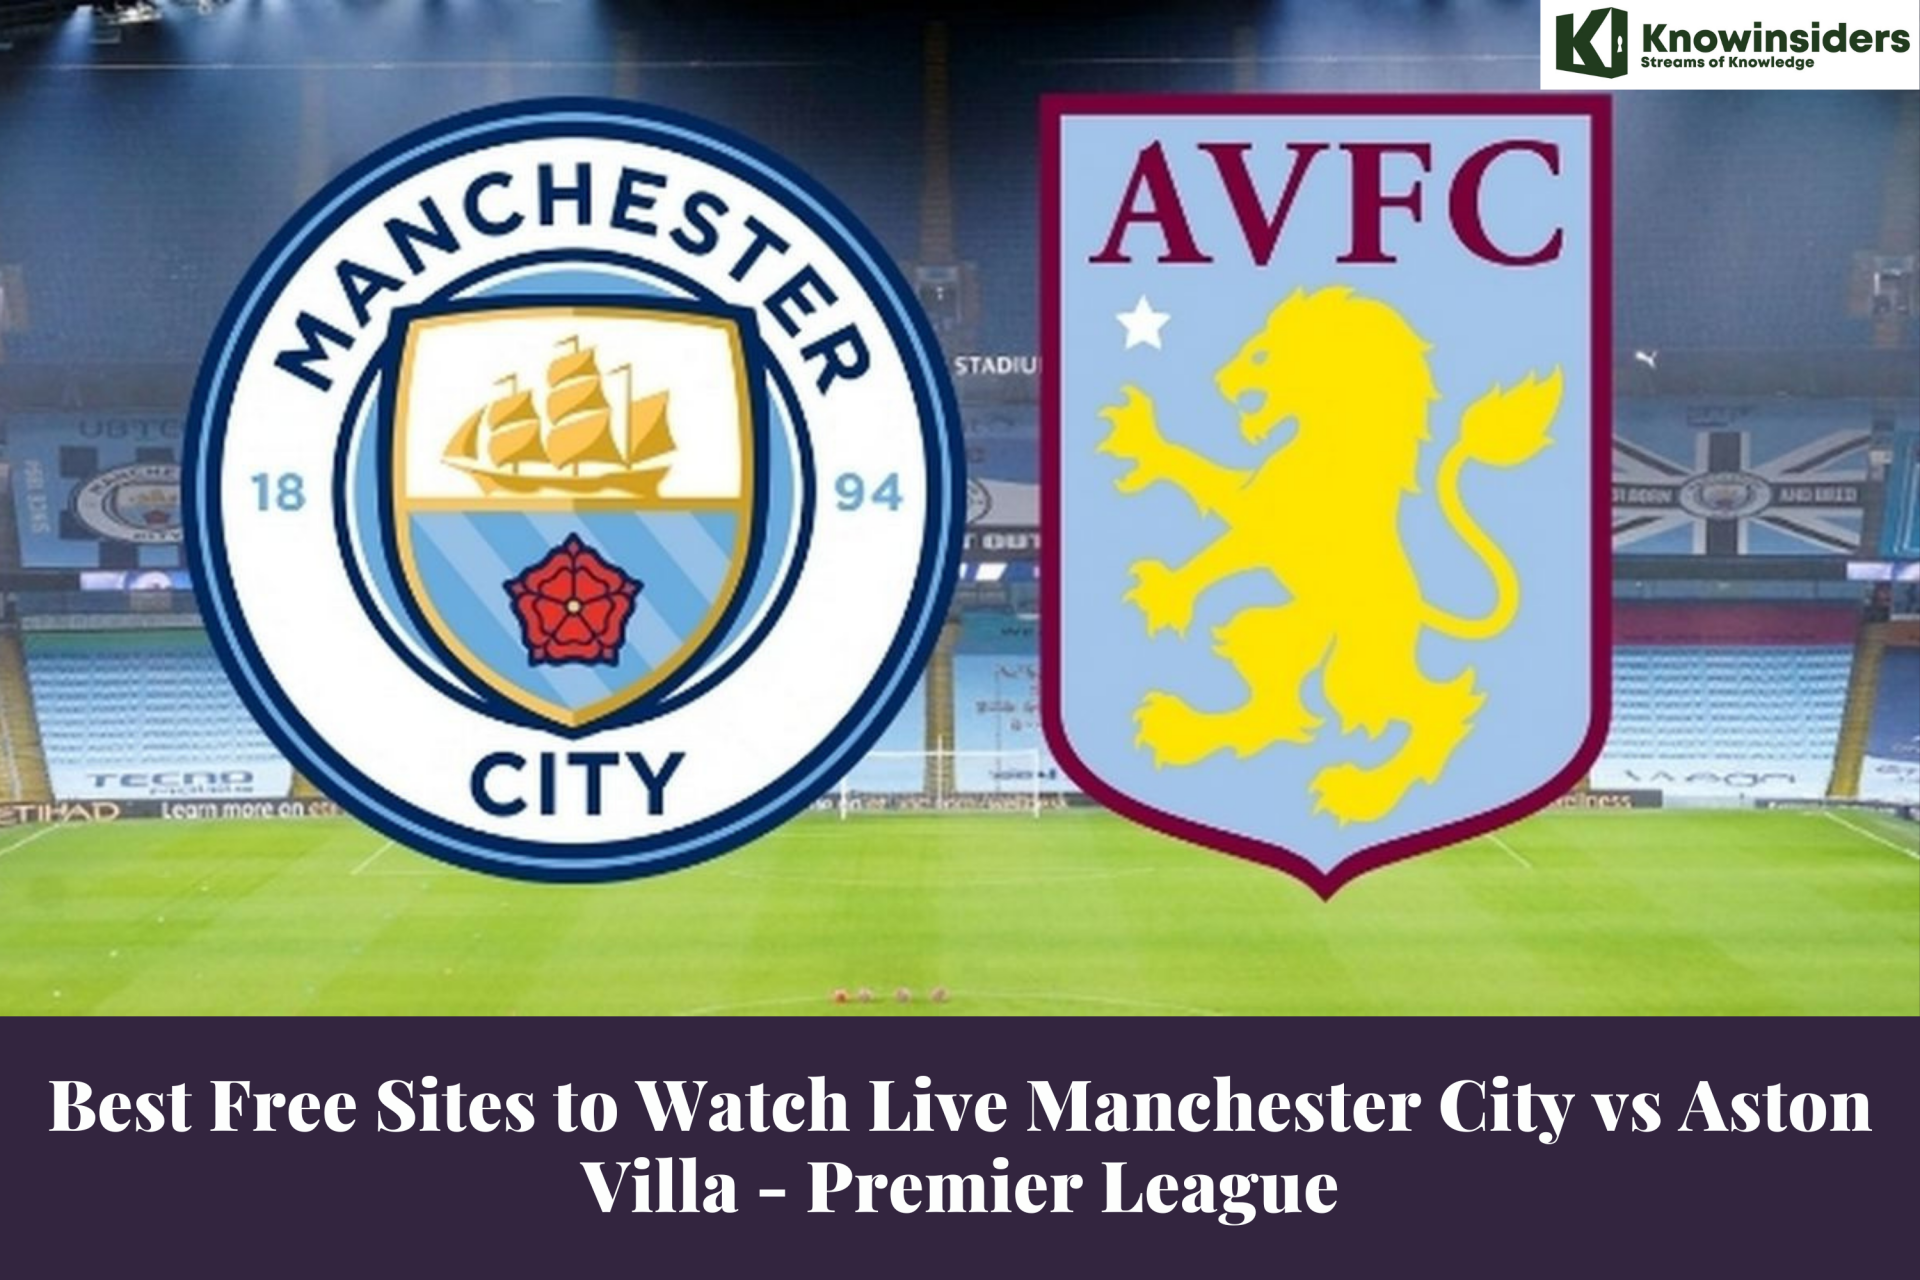 Best Free Sites to Watch Live Manchester City vs Aston Villa - Premier League Final Day